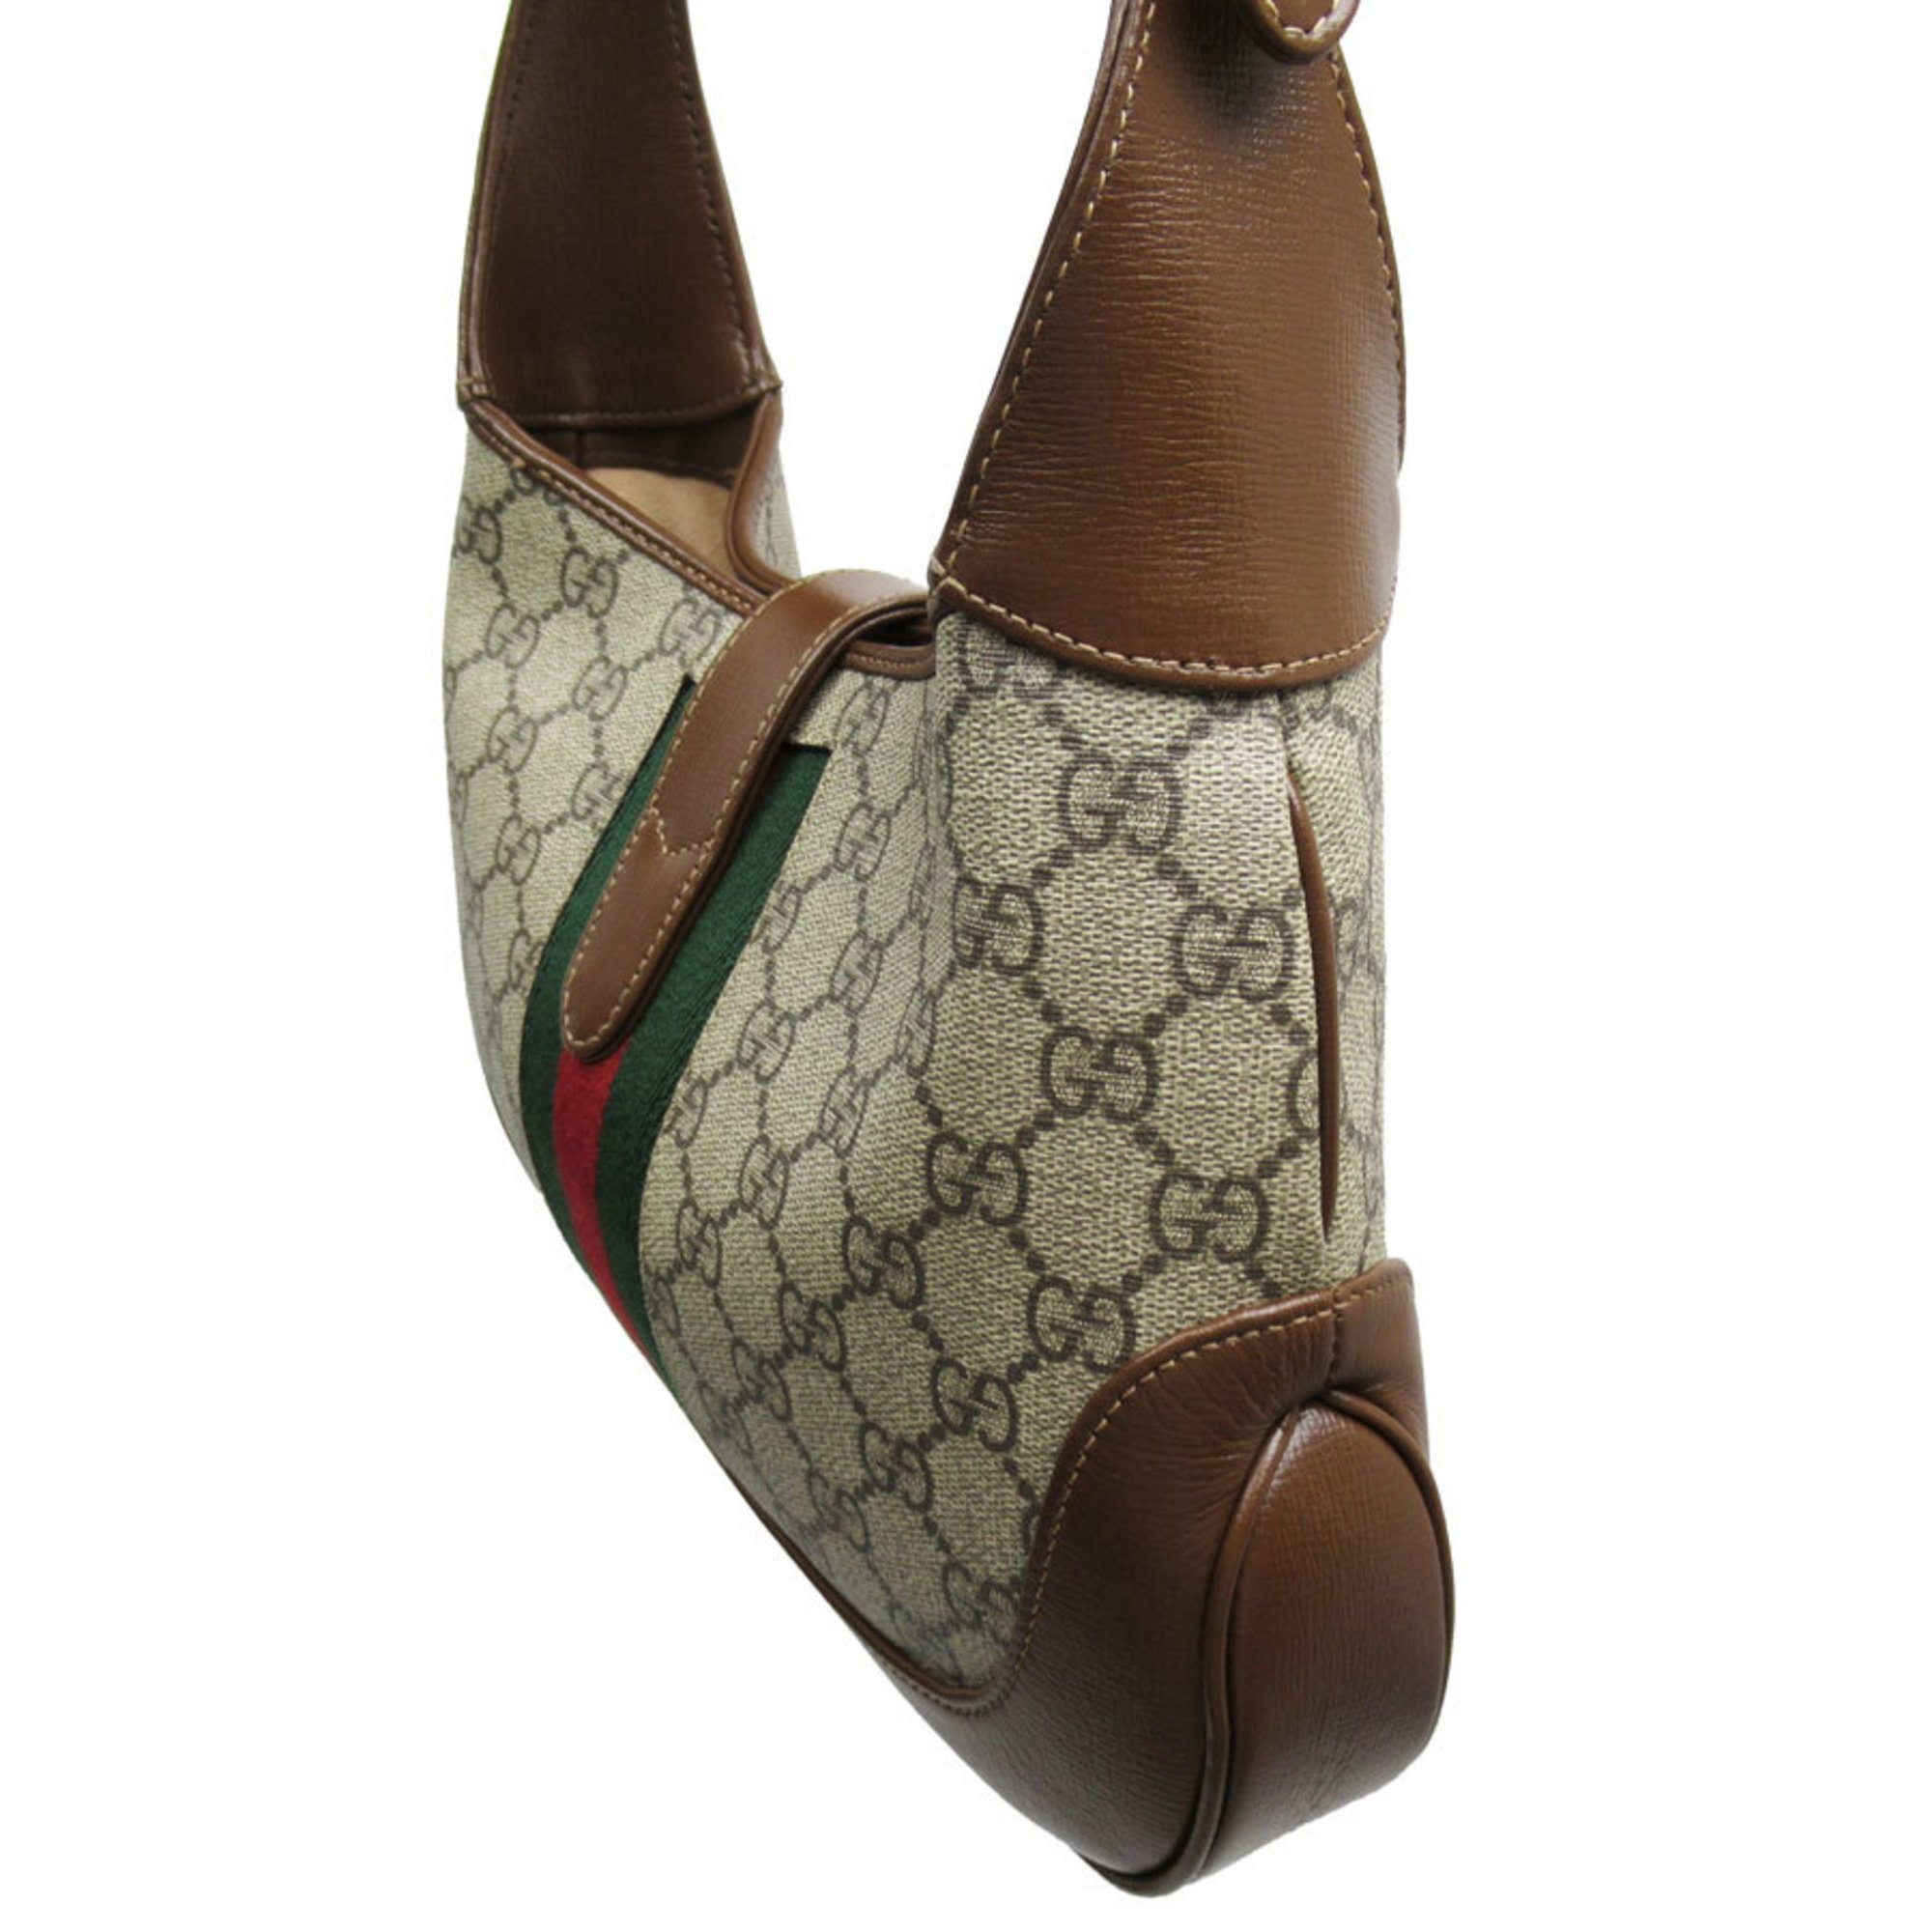 GUCCI Shoulder Bag New Jackie Leather Beige Brown Gold Women's 636706 w0501i